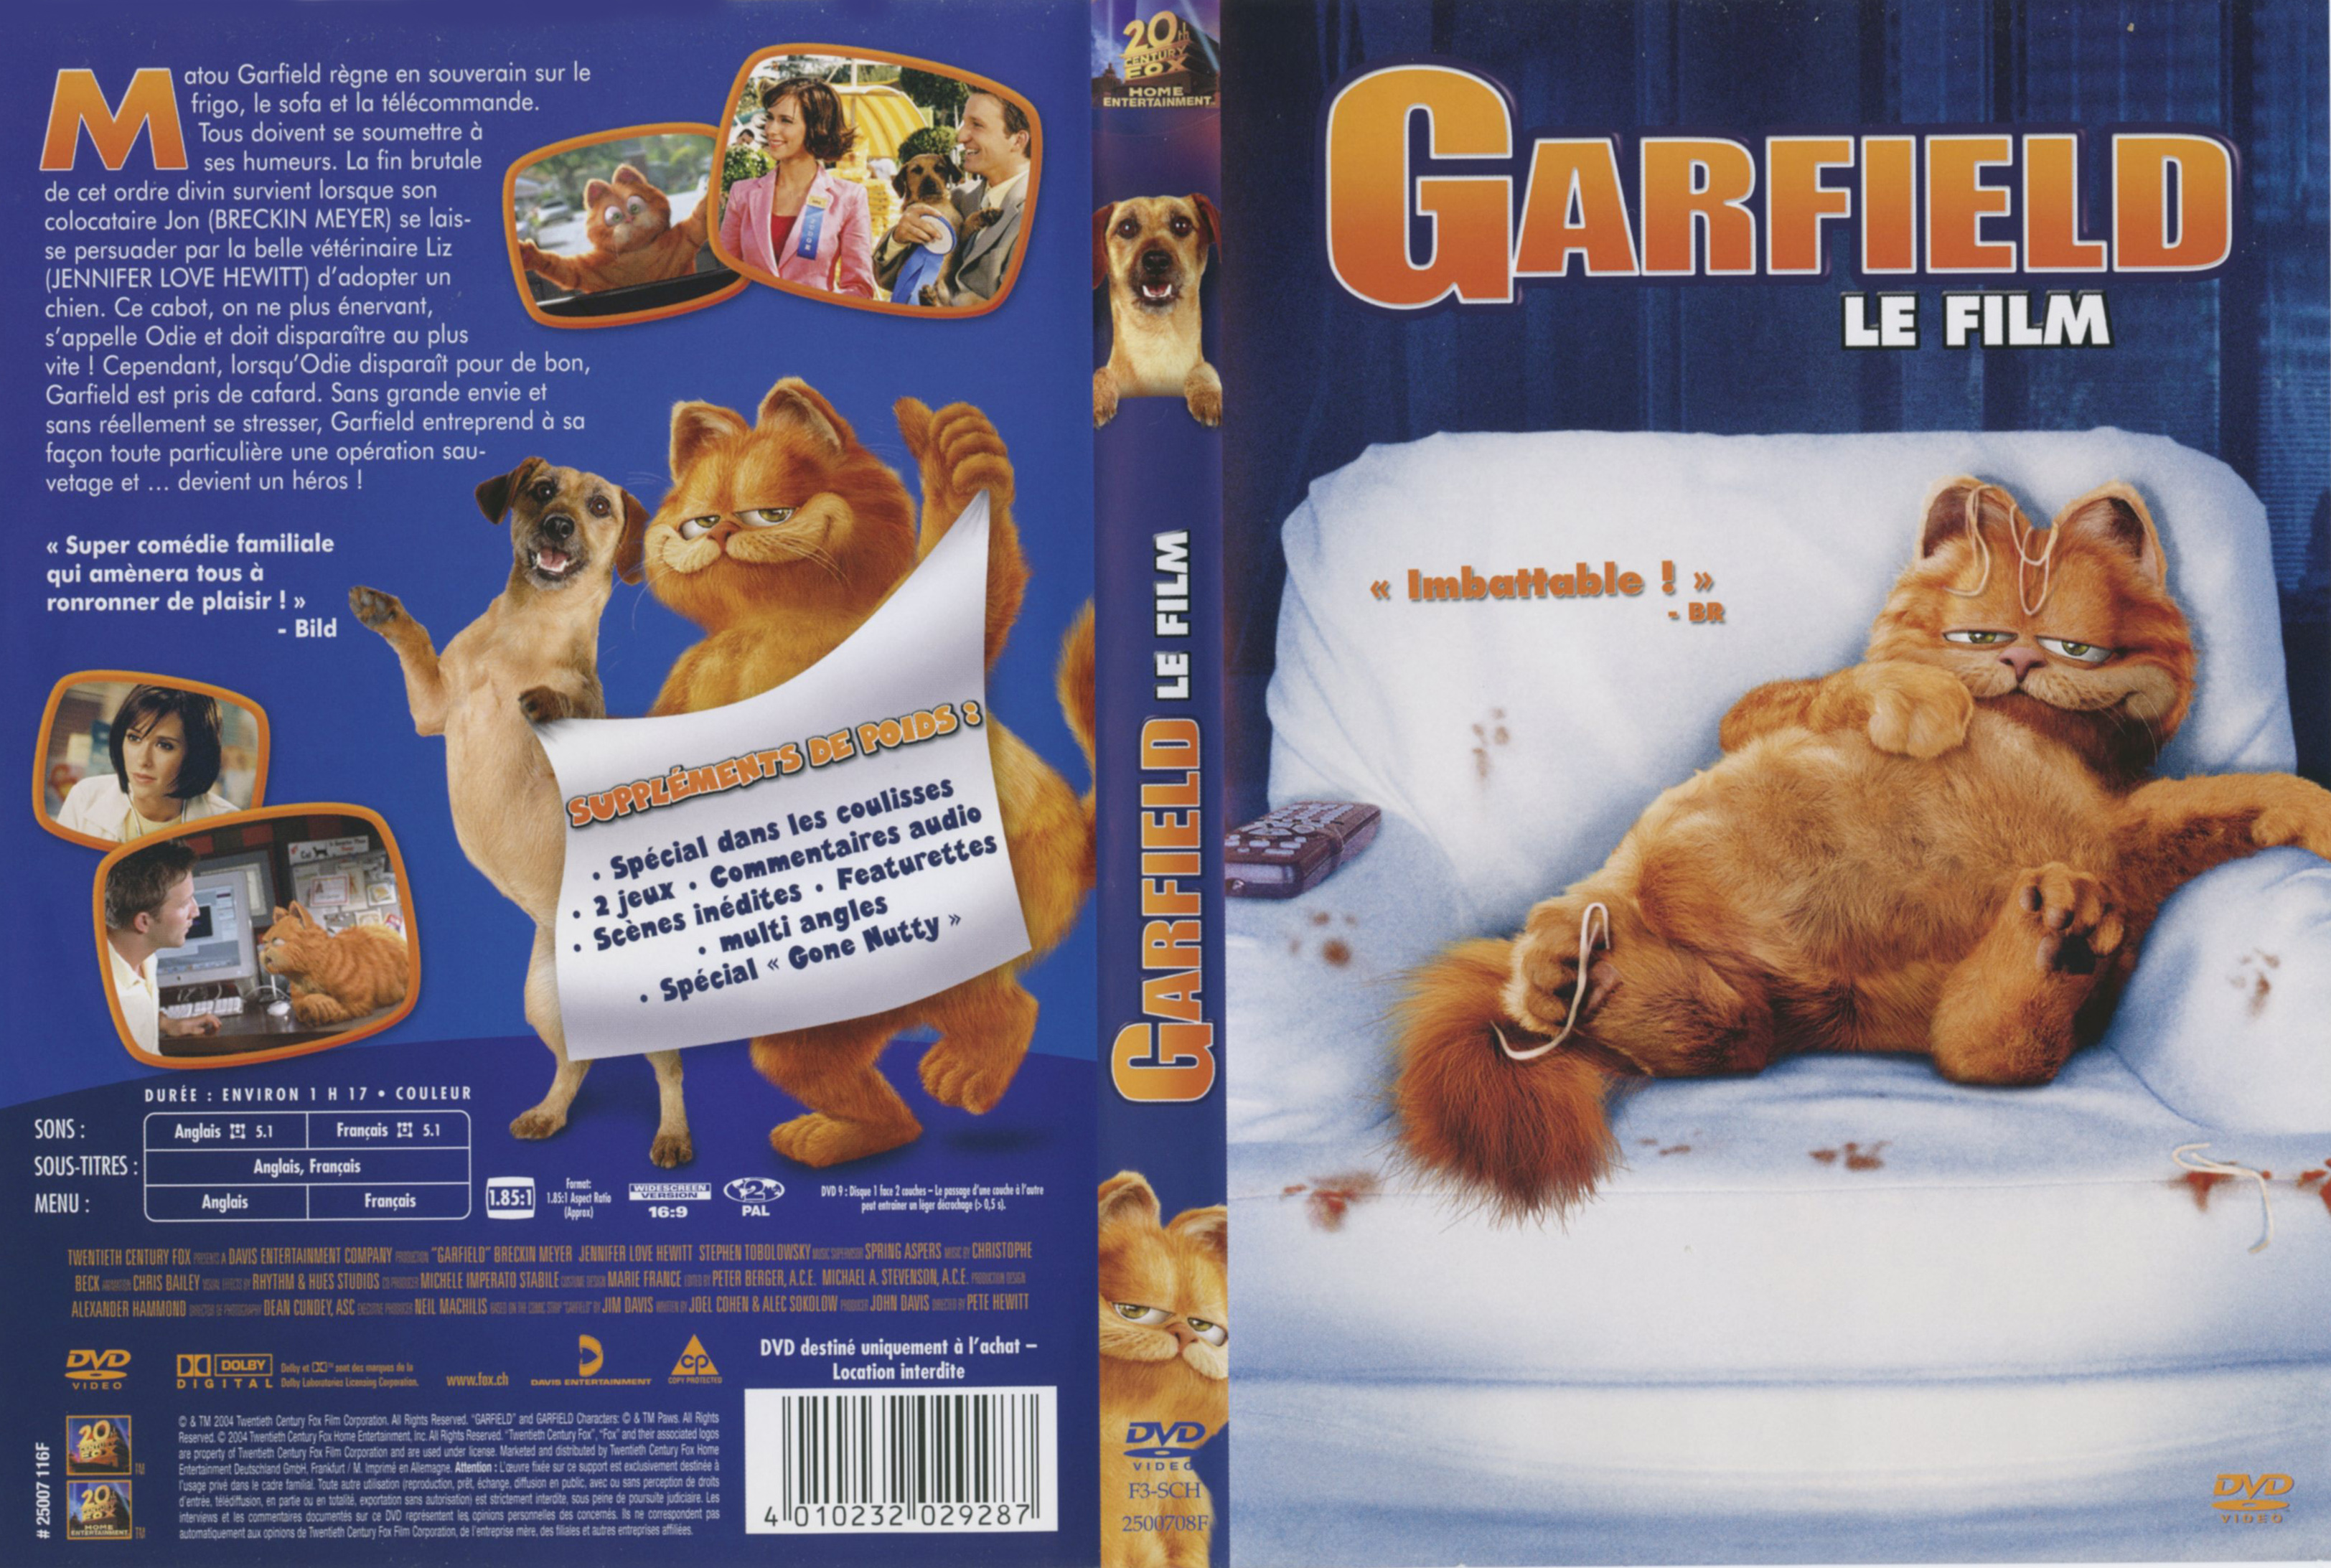 Jaquette DVD Garfield Le film